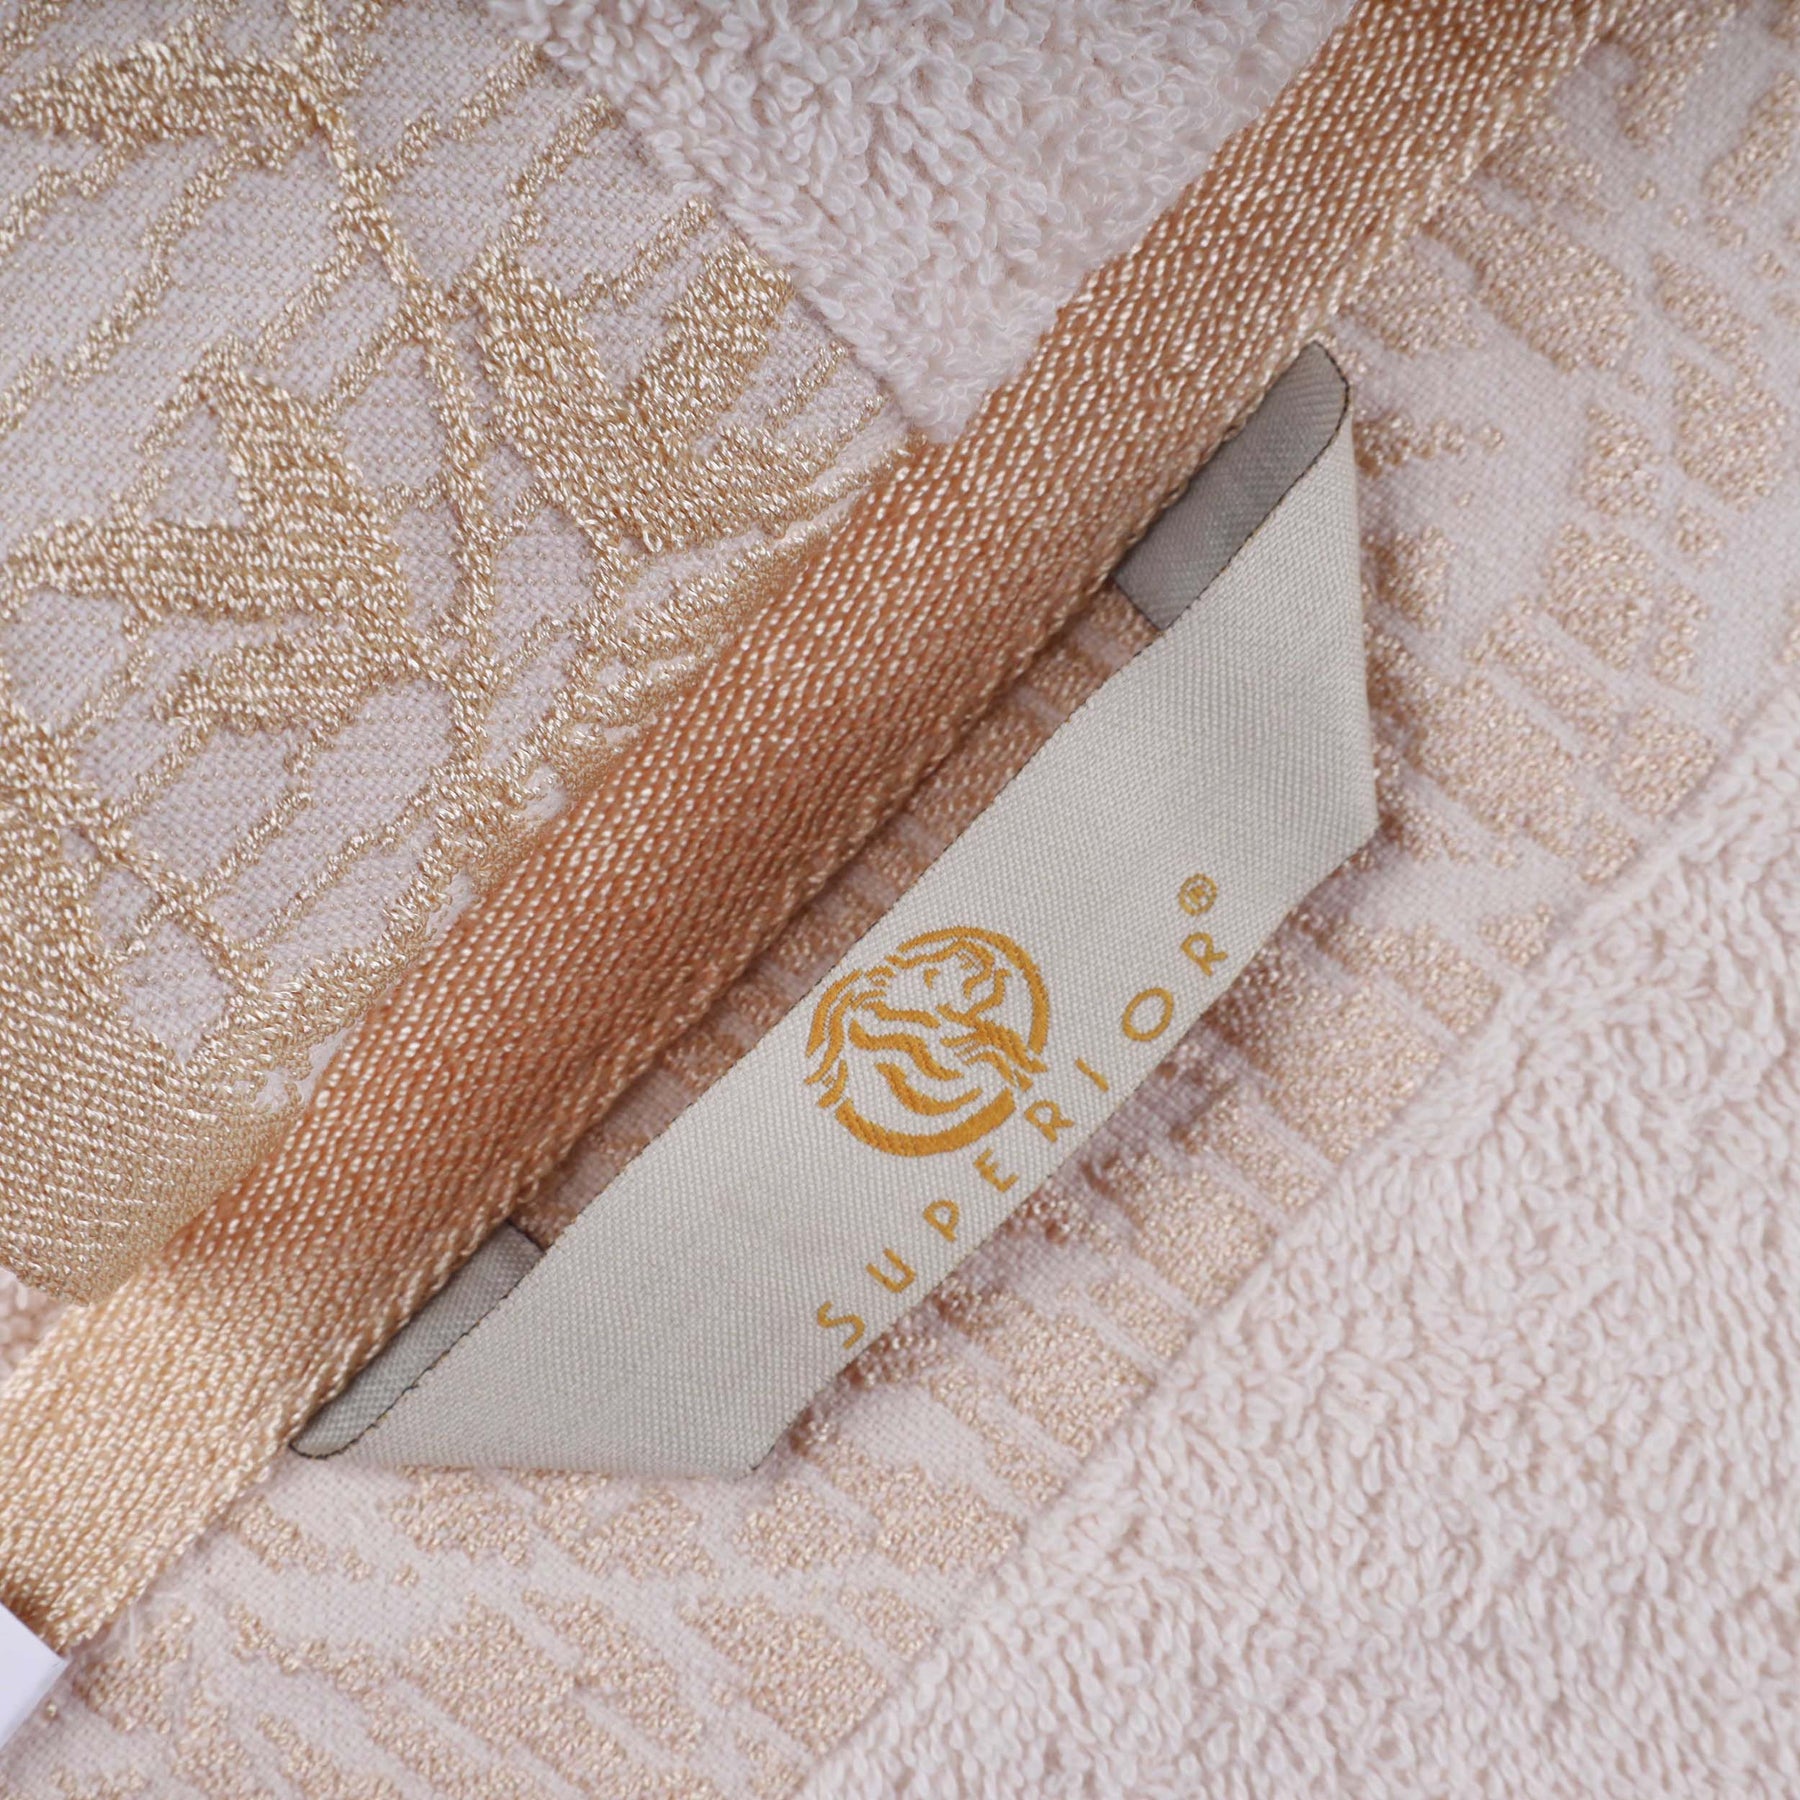 Superior Wisteria Cotton Floral Jacquard 12 Piece Towel Set - Ivory